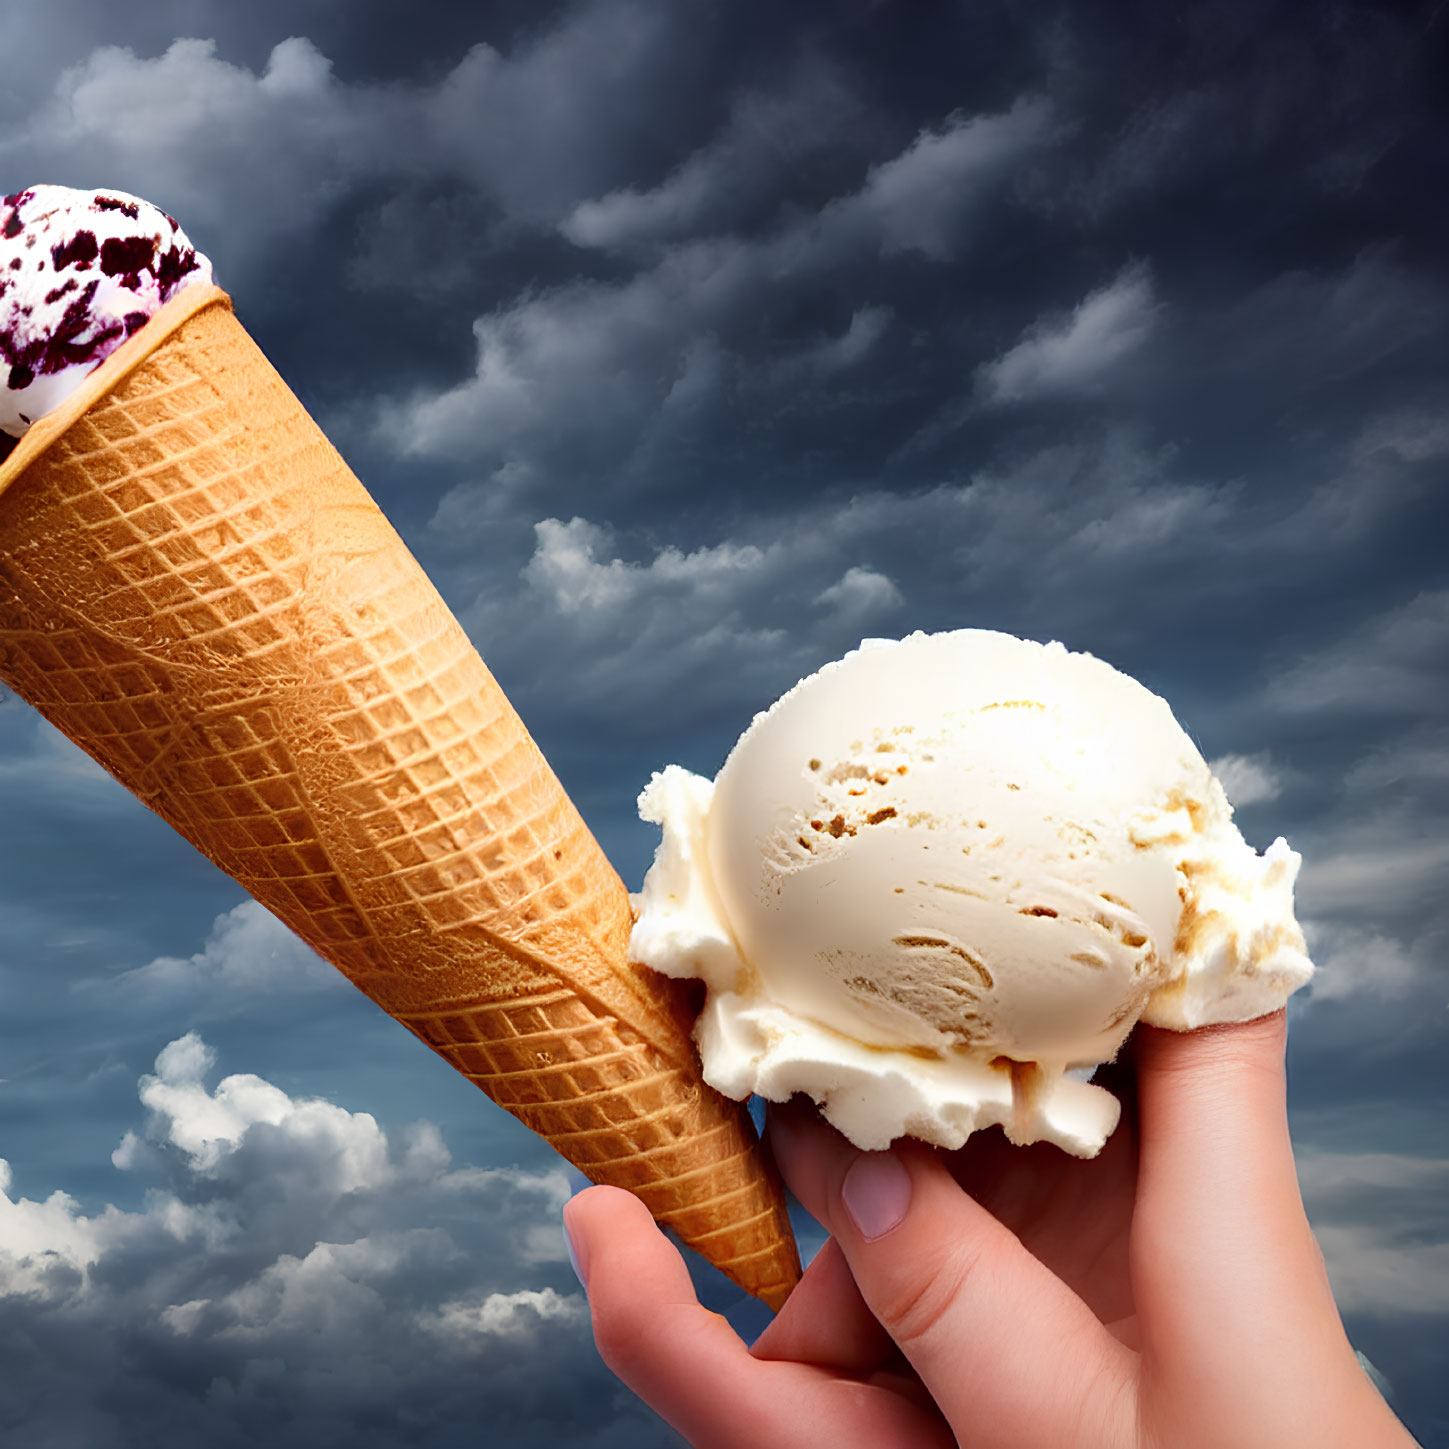 Vanilla ice cream scoop in waffle cone against cloudy sky